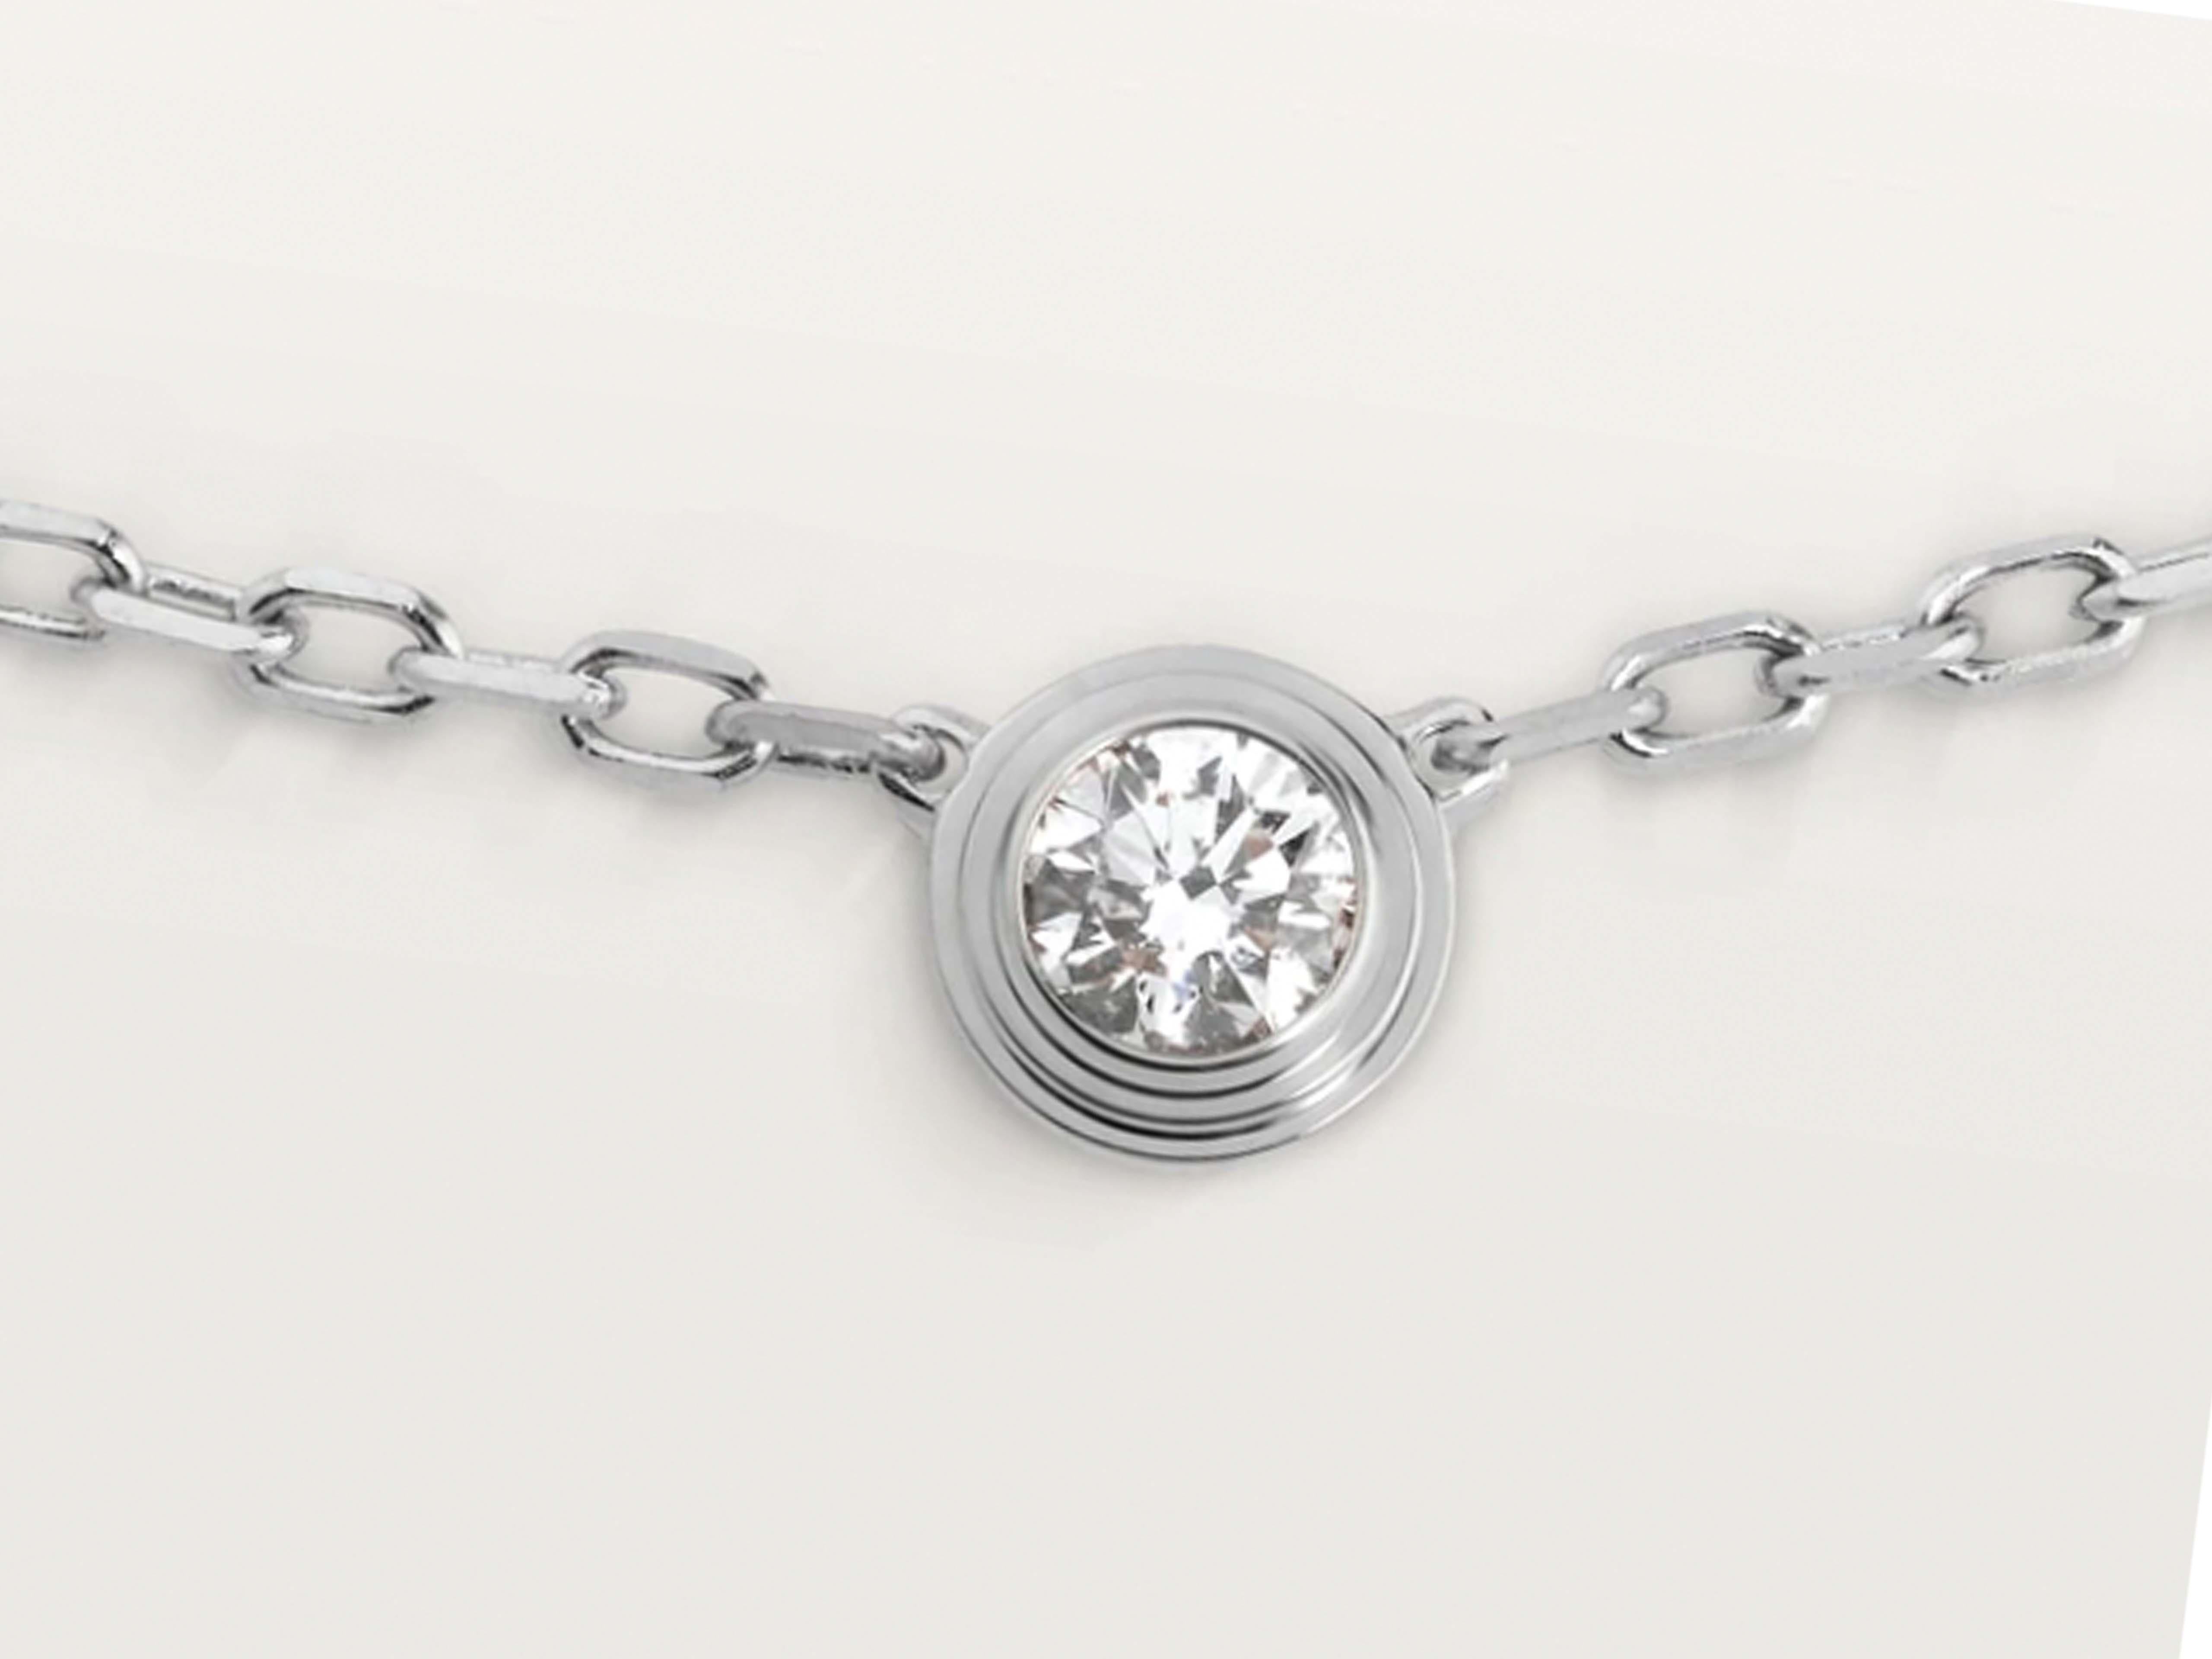 Brilliant Cut Cartier D'amour Diamond Necklace in 18k White Gold